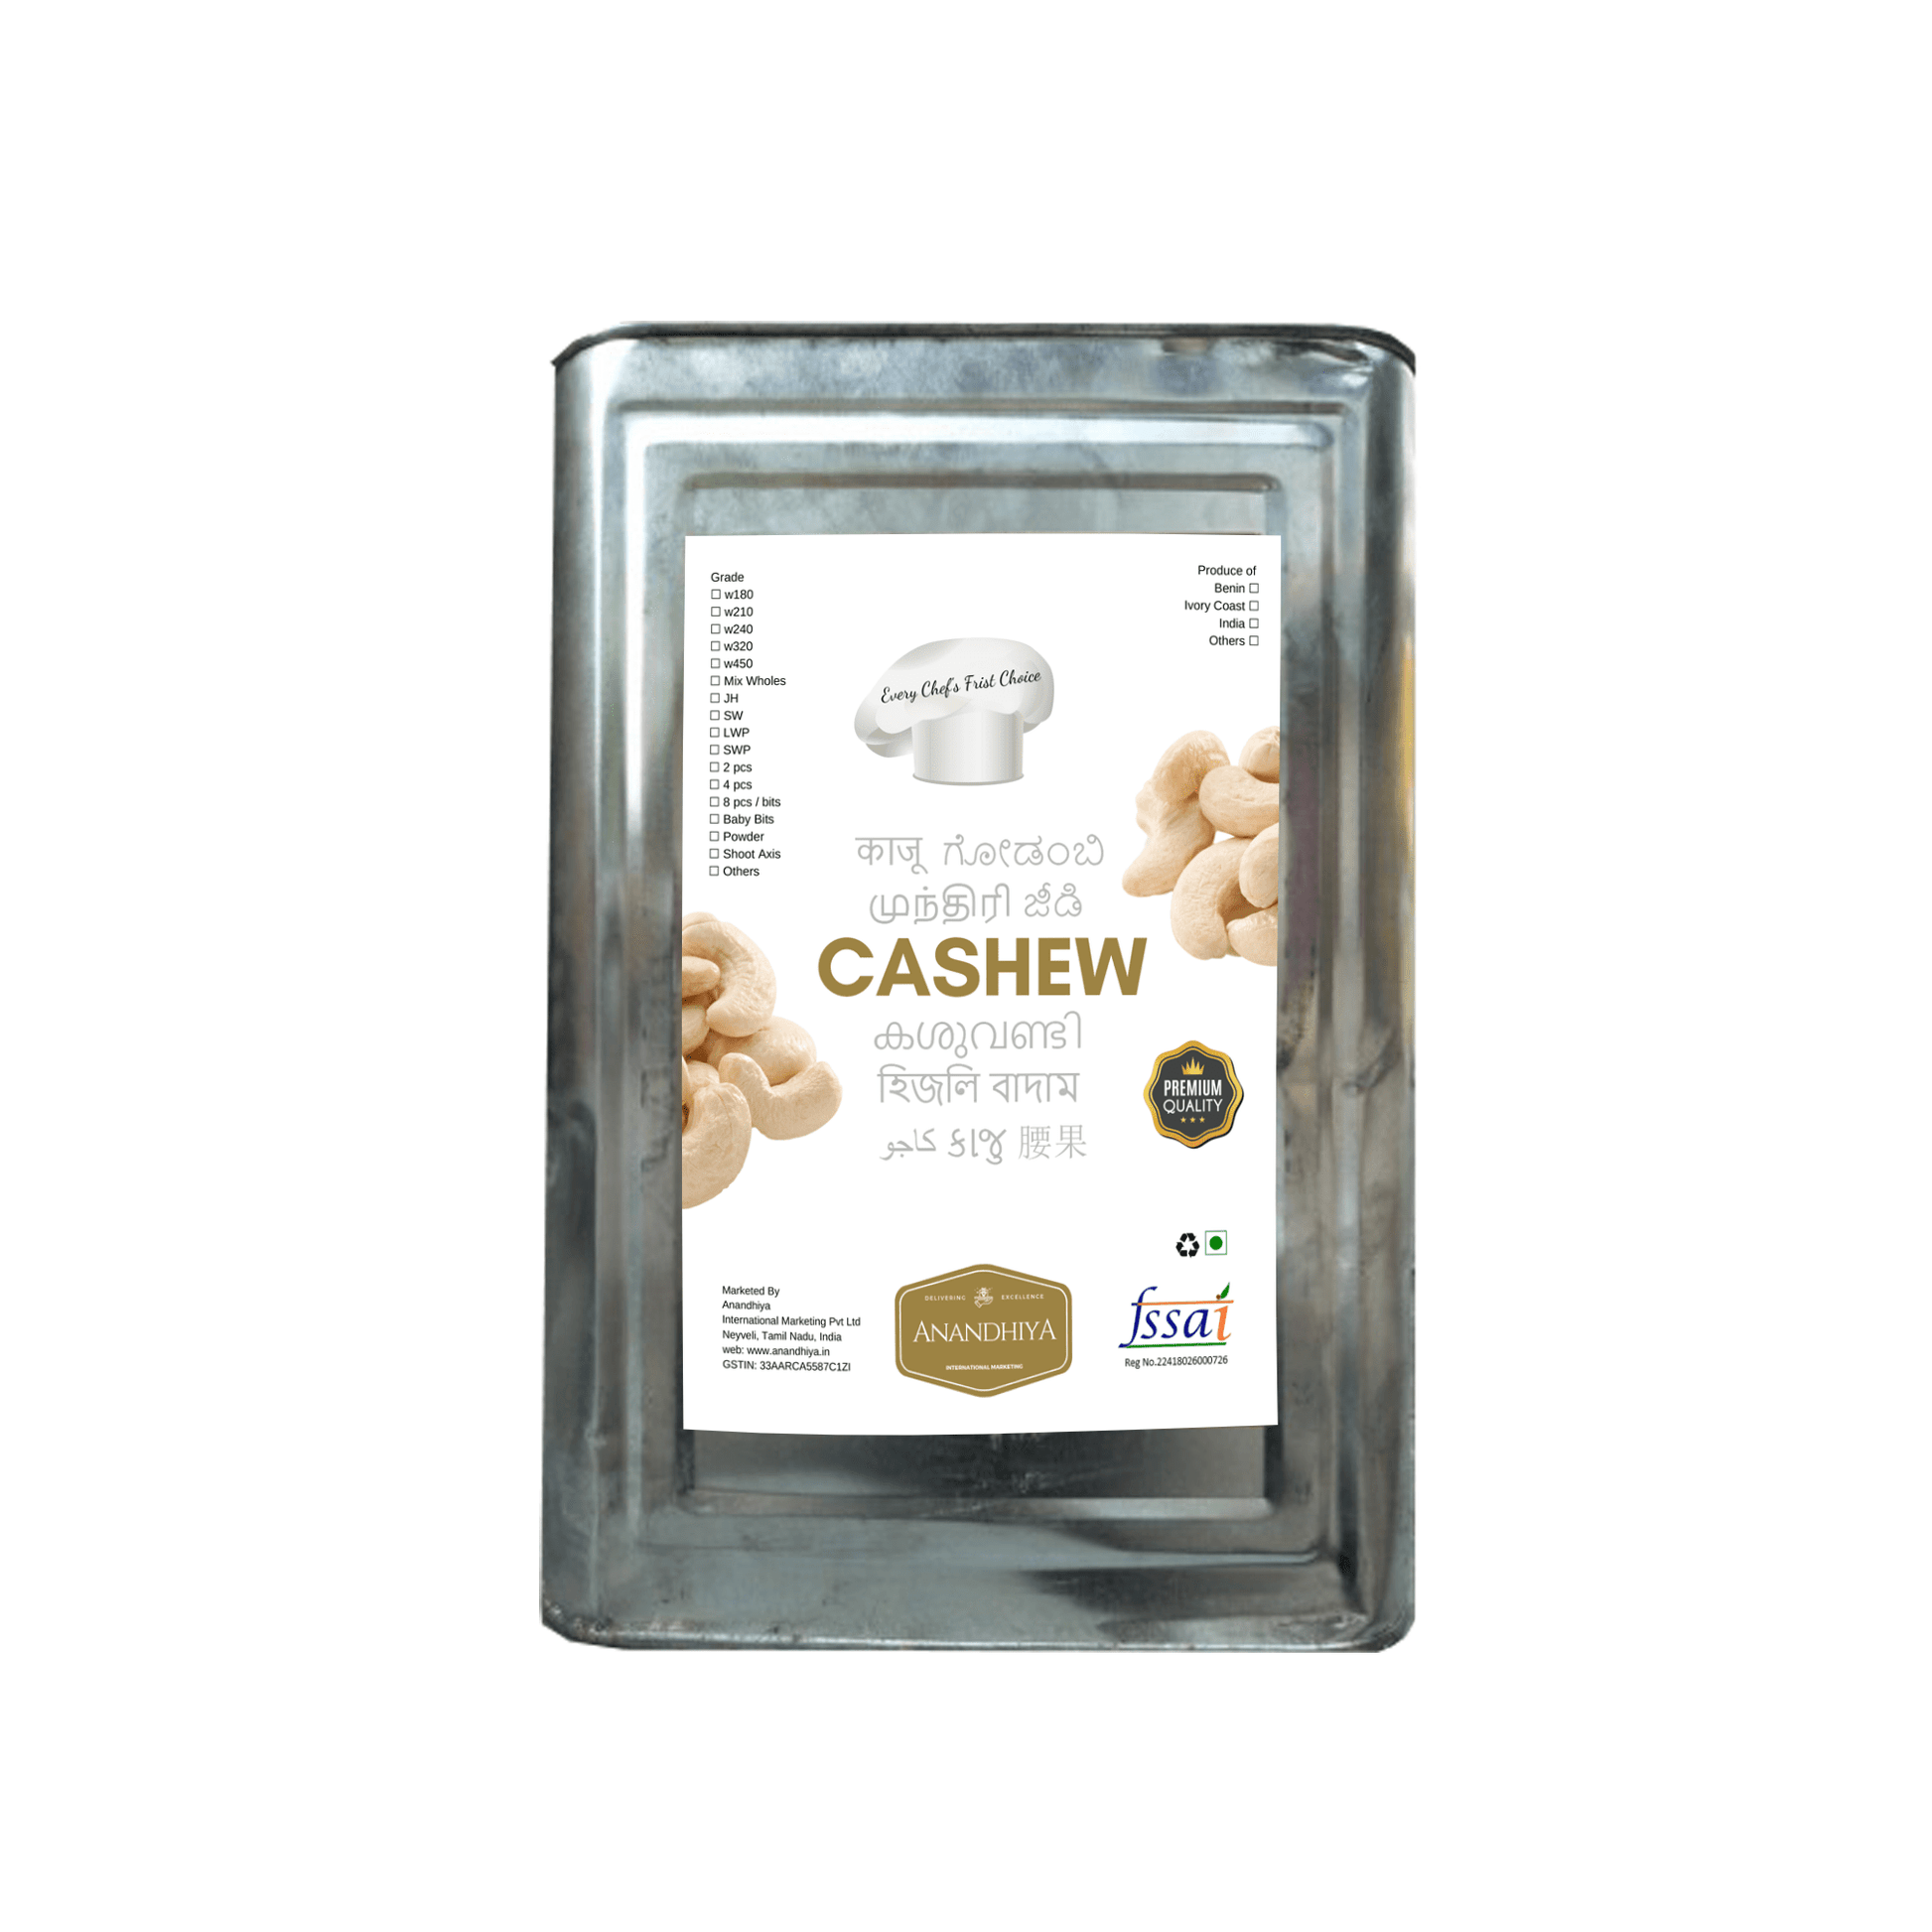 Anandhiya Cashews SW Scorched Cashew Wholes